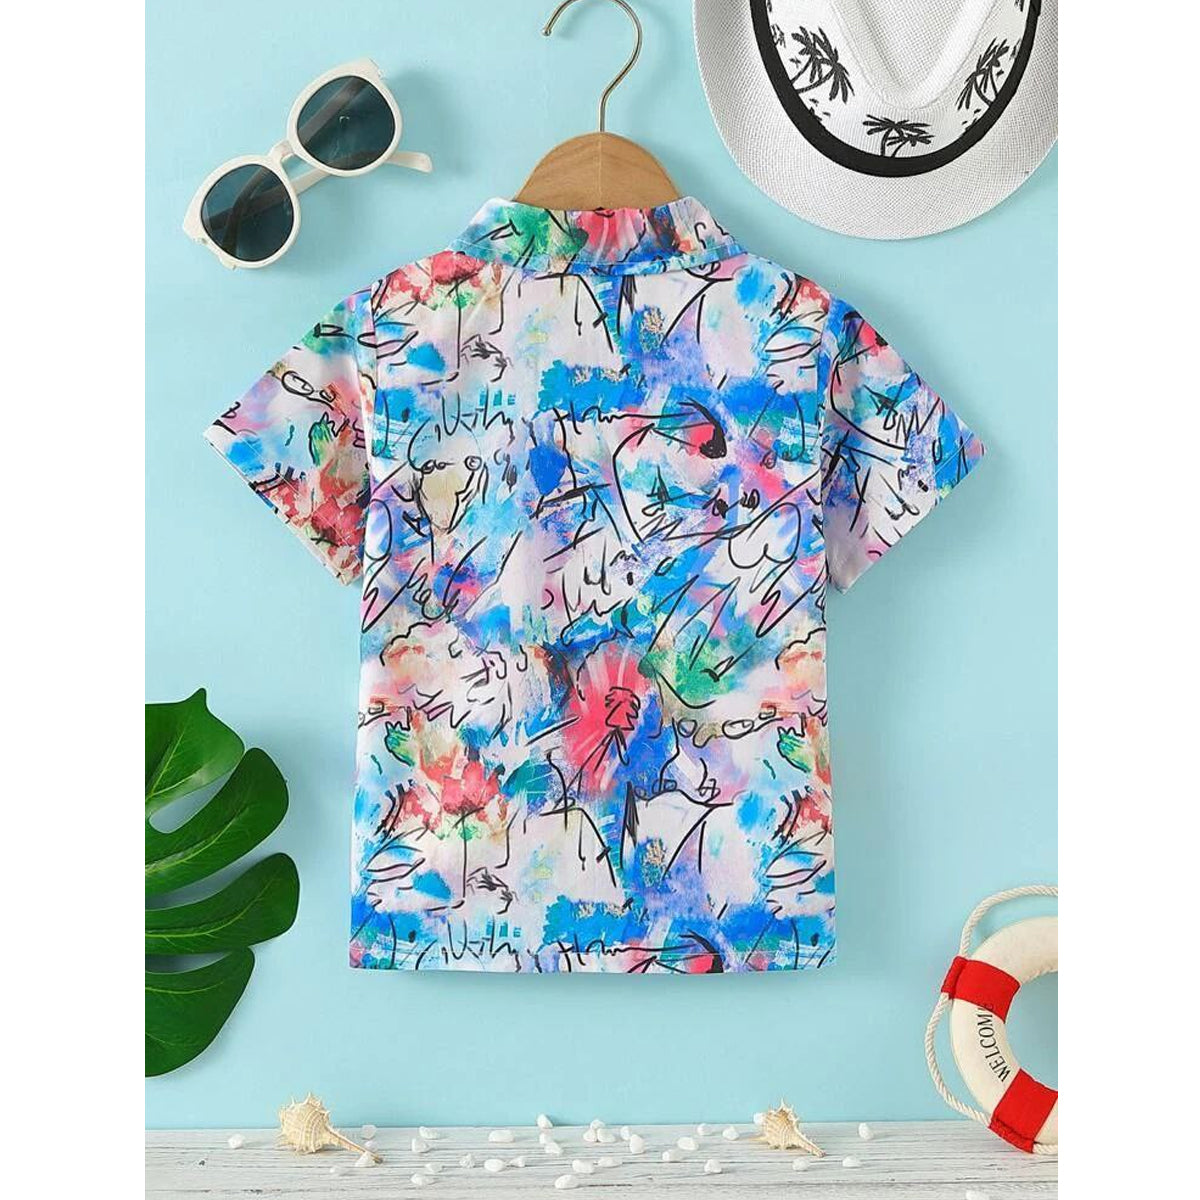 Venutaloza Boy's Stylish Evryday Bear & Rainbow Graphic Designer Button Front Shirt (Combo Pack Of 2) For Boy.